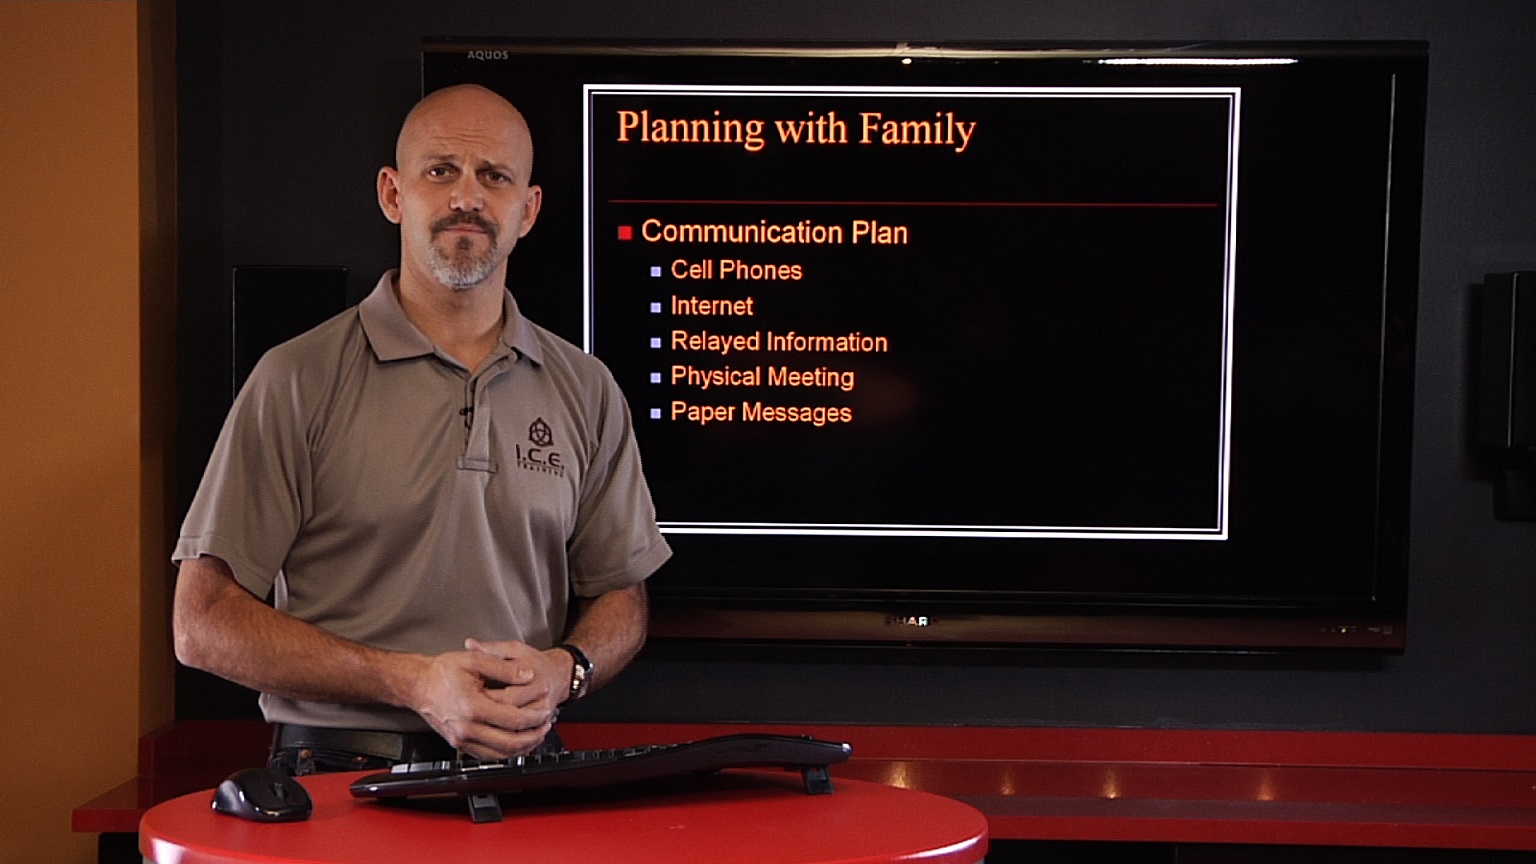 Family Safety Plan: Communication